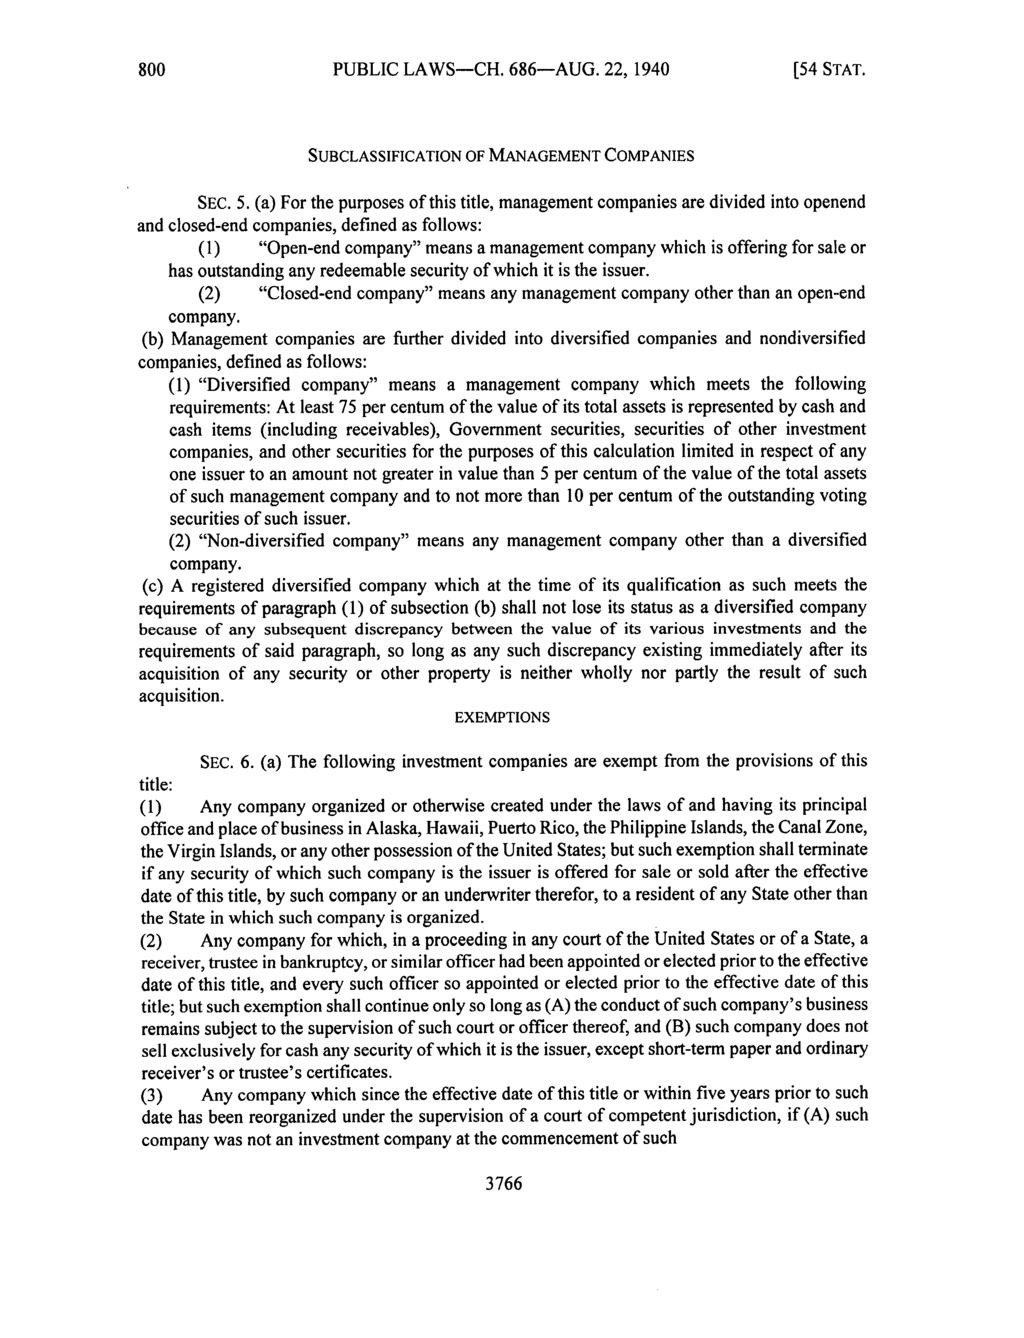 800 PUBLIC LAWS-CH. 686-AUG. 22, 1940 [54 STAT. SUBCLASSIFICATION OF MANAGEMENT COMPANIES SEC. 5.